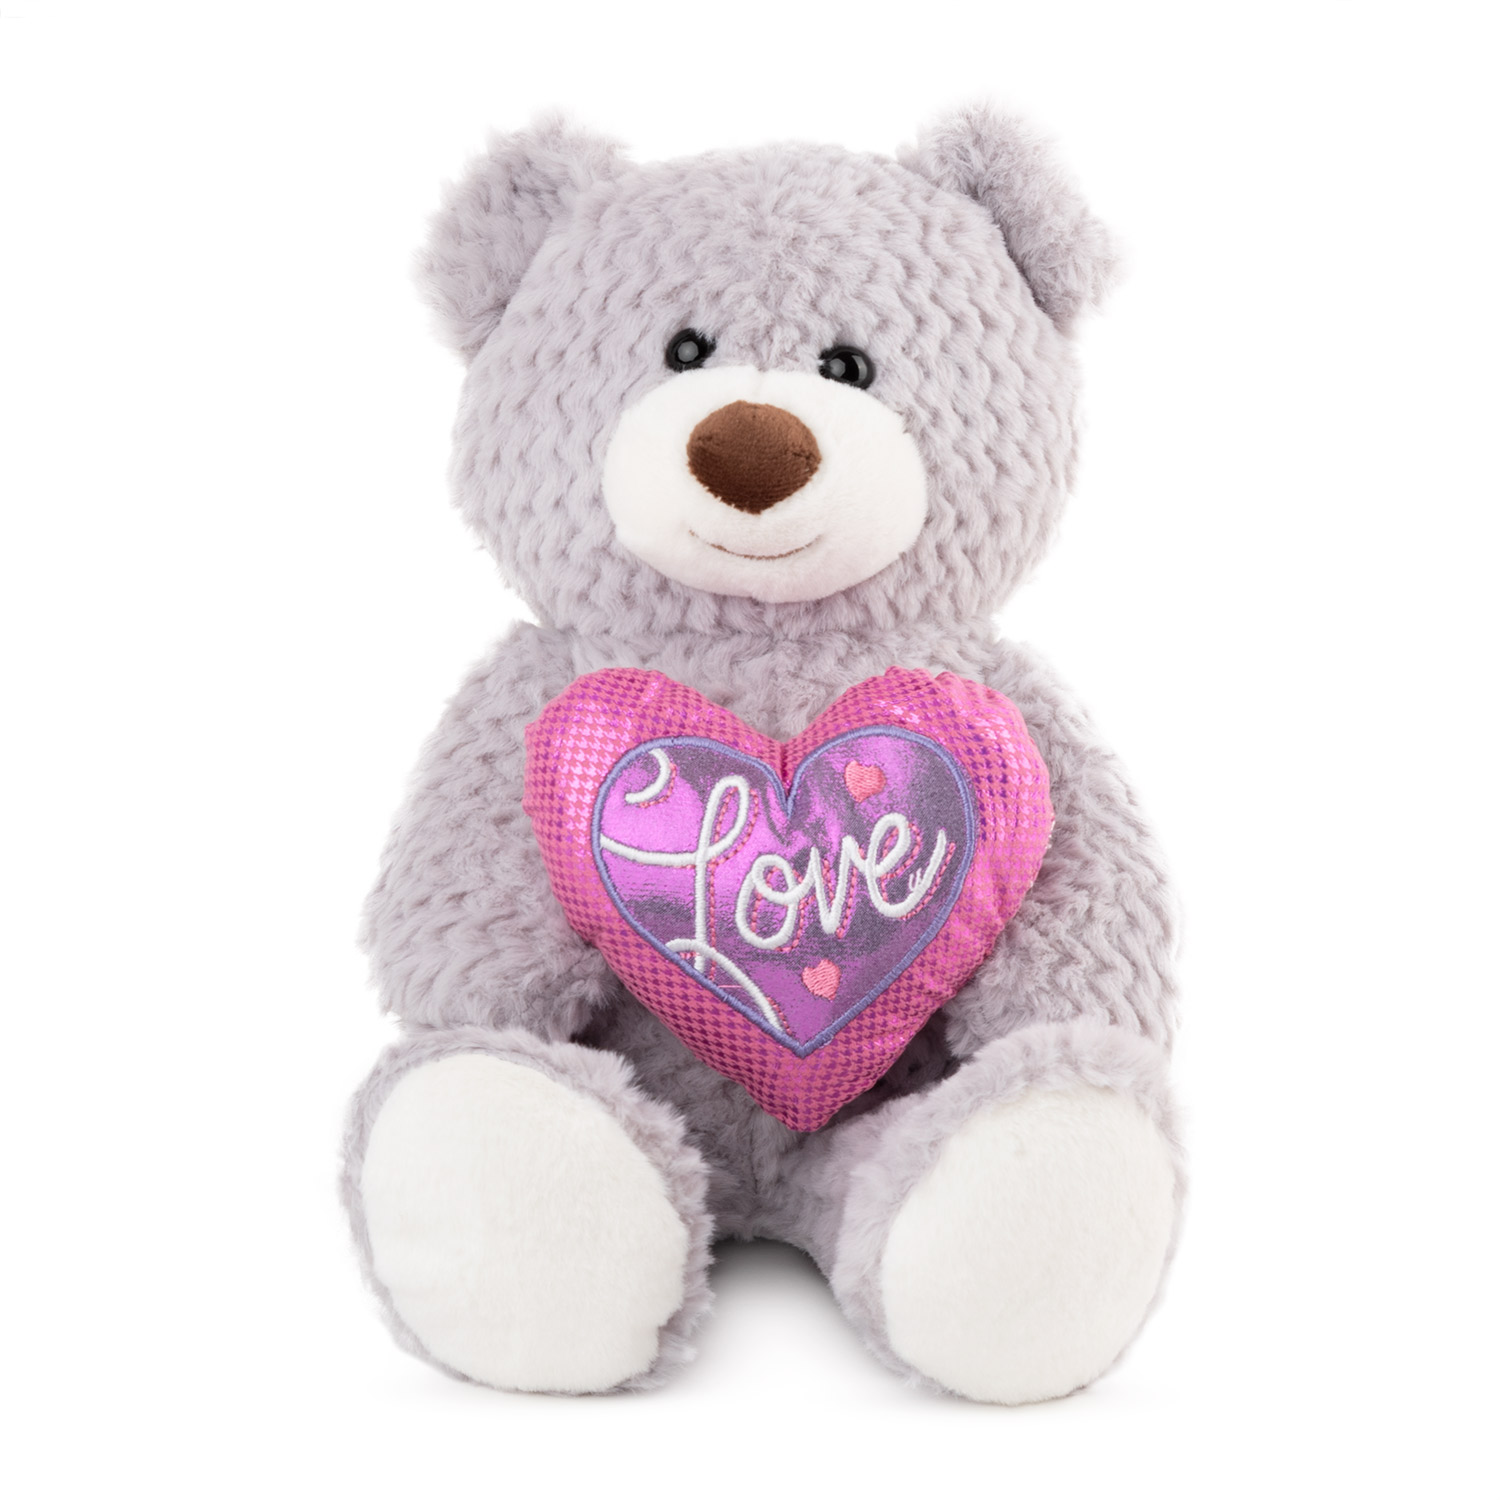 Bear with heart - Grey